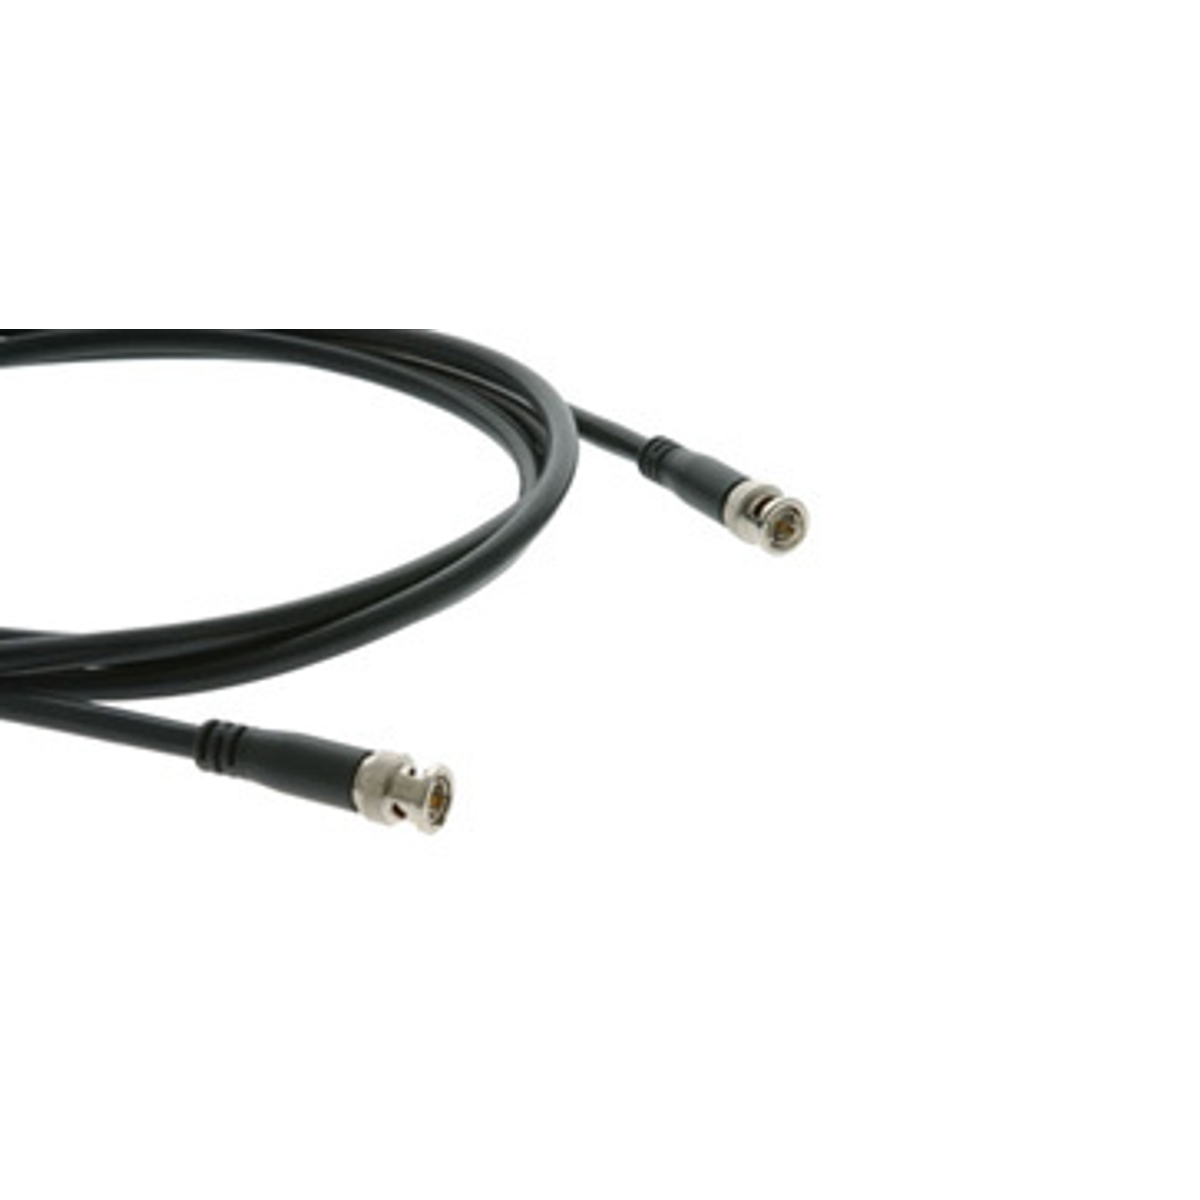 1 BNC (M) to 1 BNC (M) RG-6 Video Cable